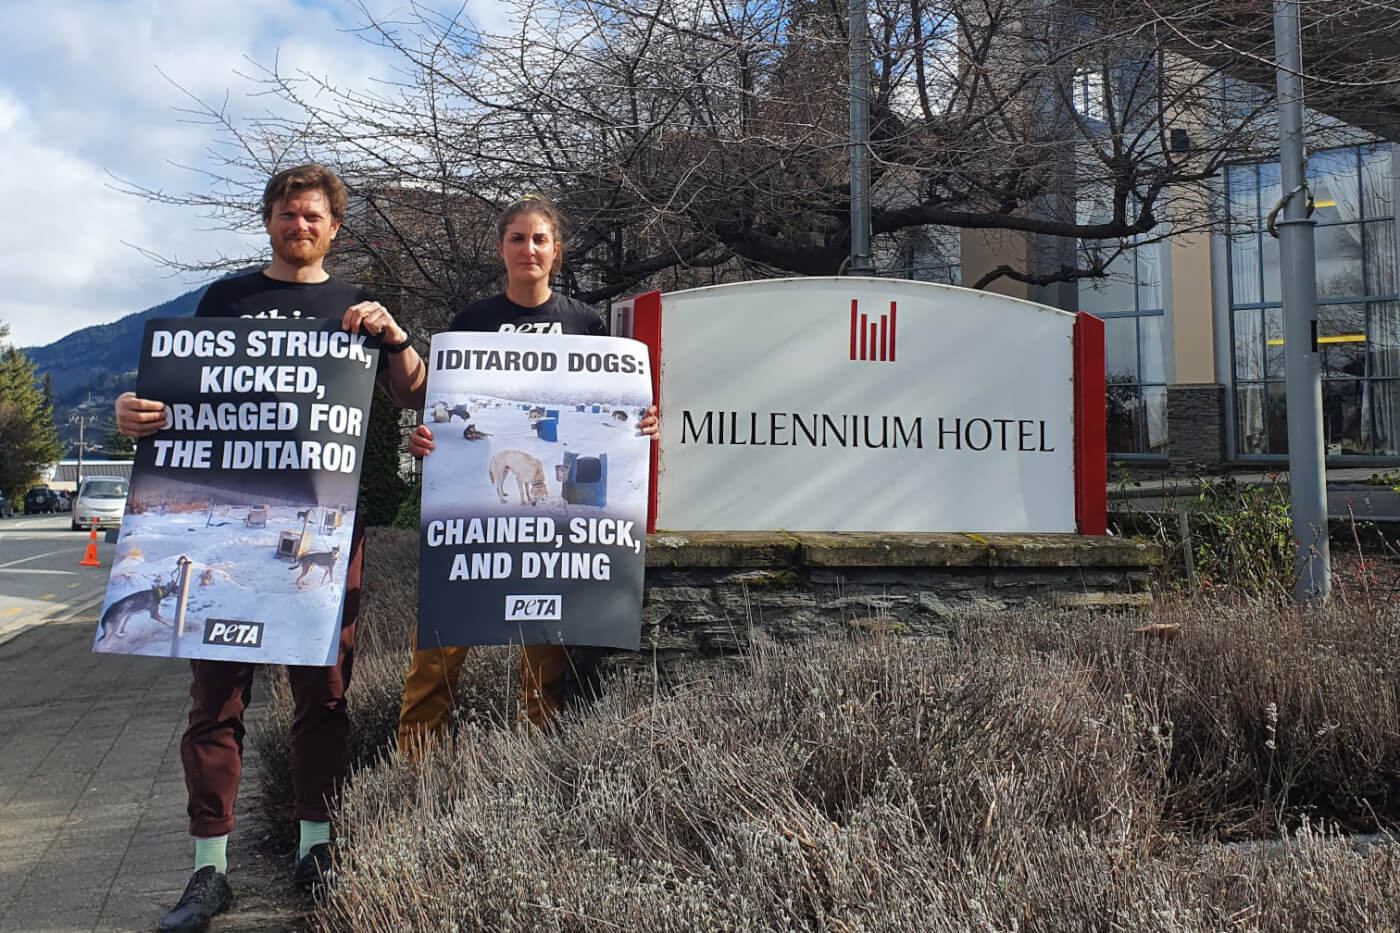 Millennium Hotel Iditarod Sponsorship Draws PETA protest Queenstown